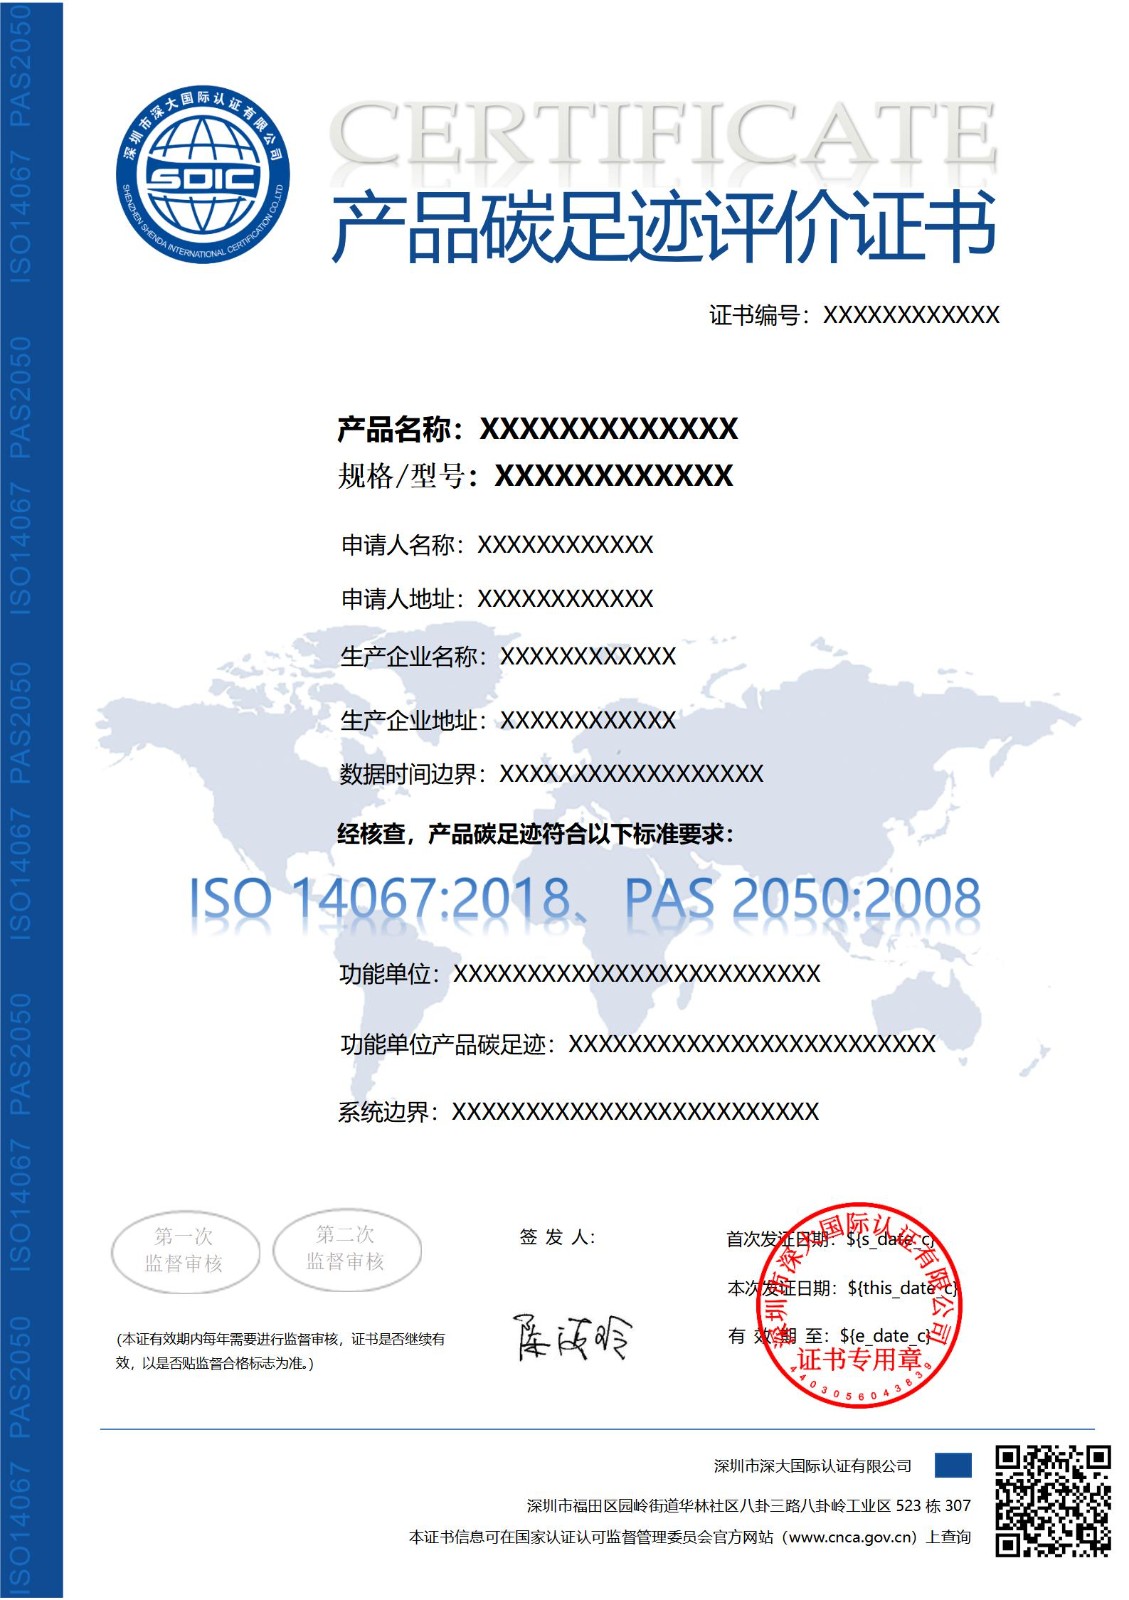 ISO 14067产品碳足迹评价证书